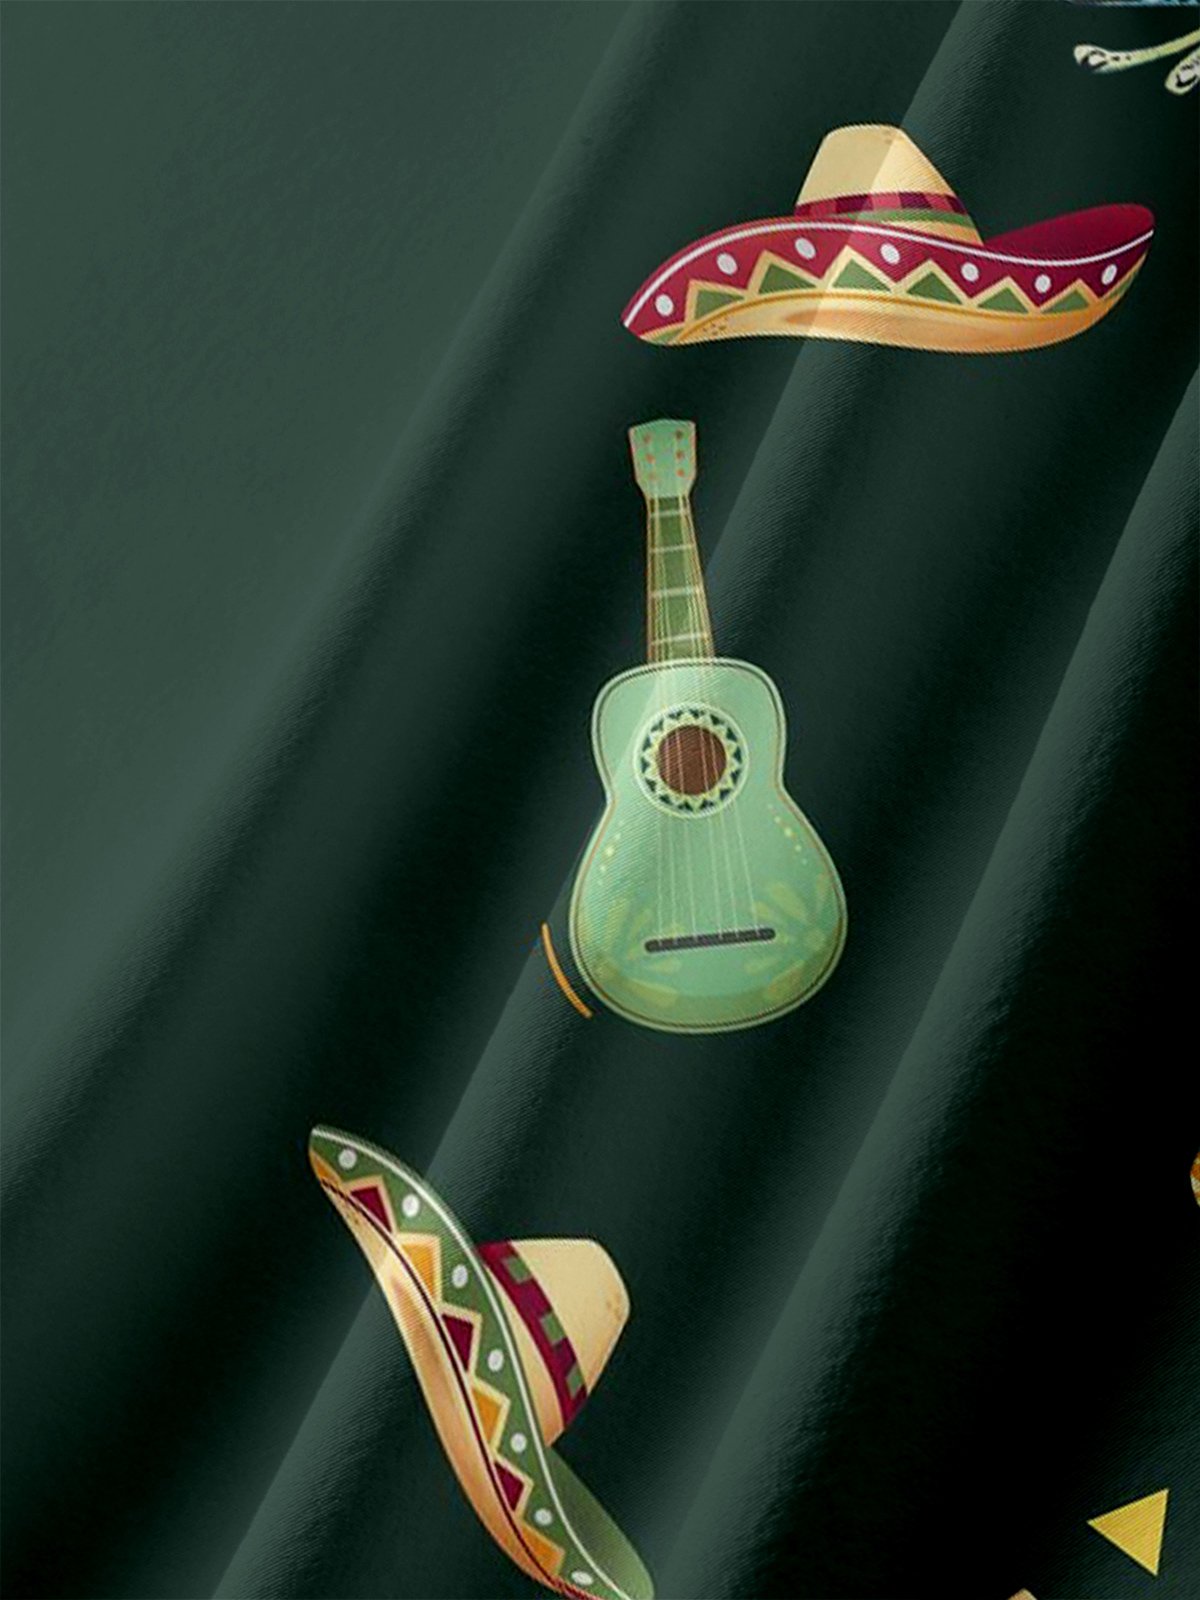 Mexican Culture Shirt By David Lozeau